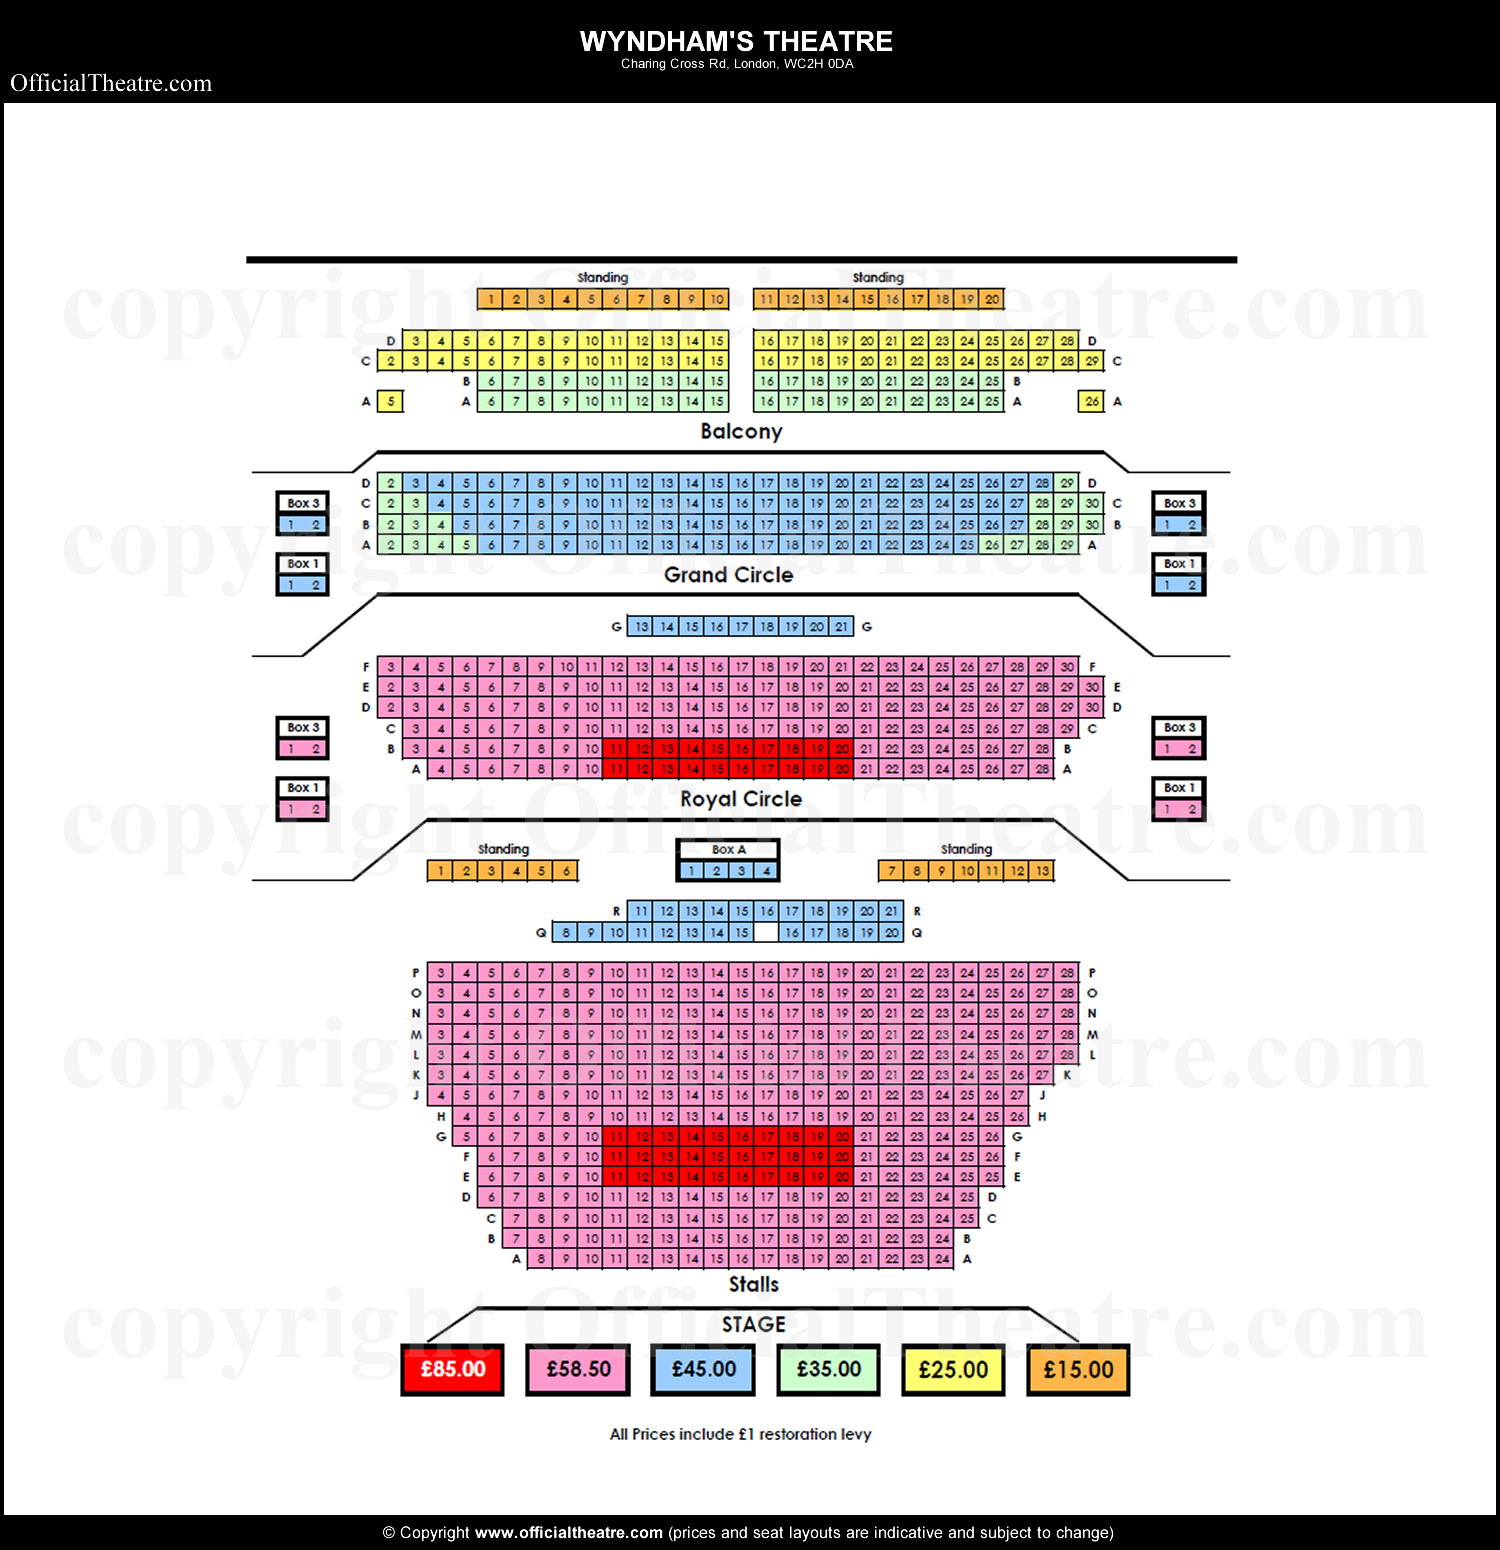 Wyndham's Theatre seating plan